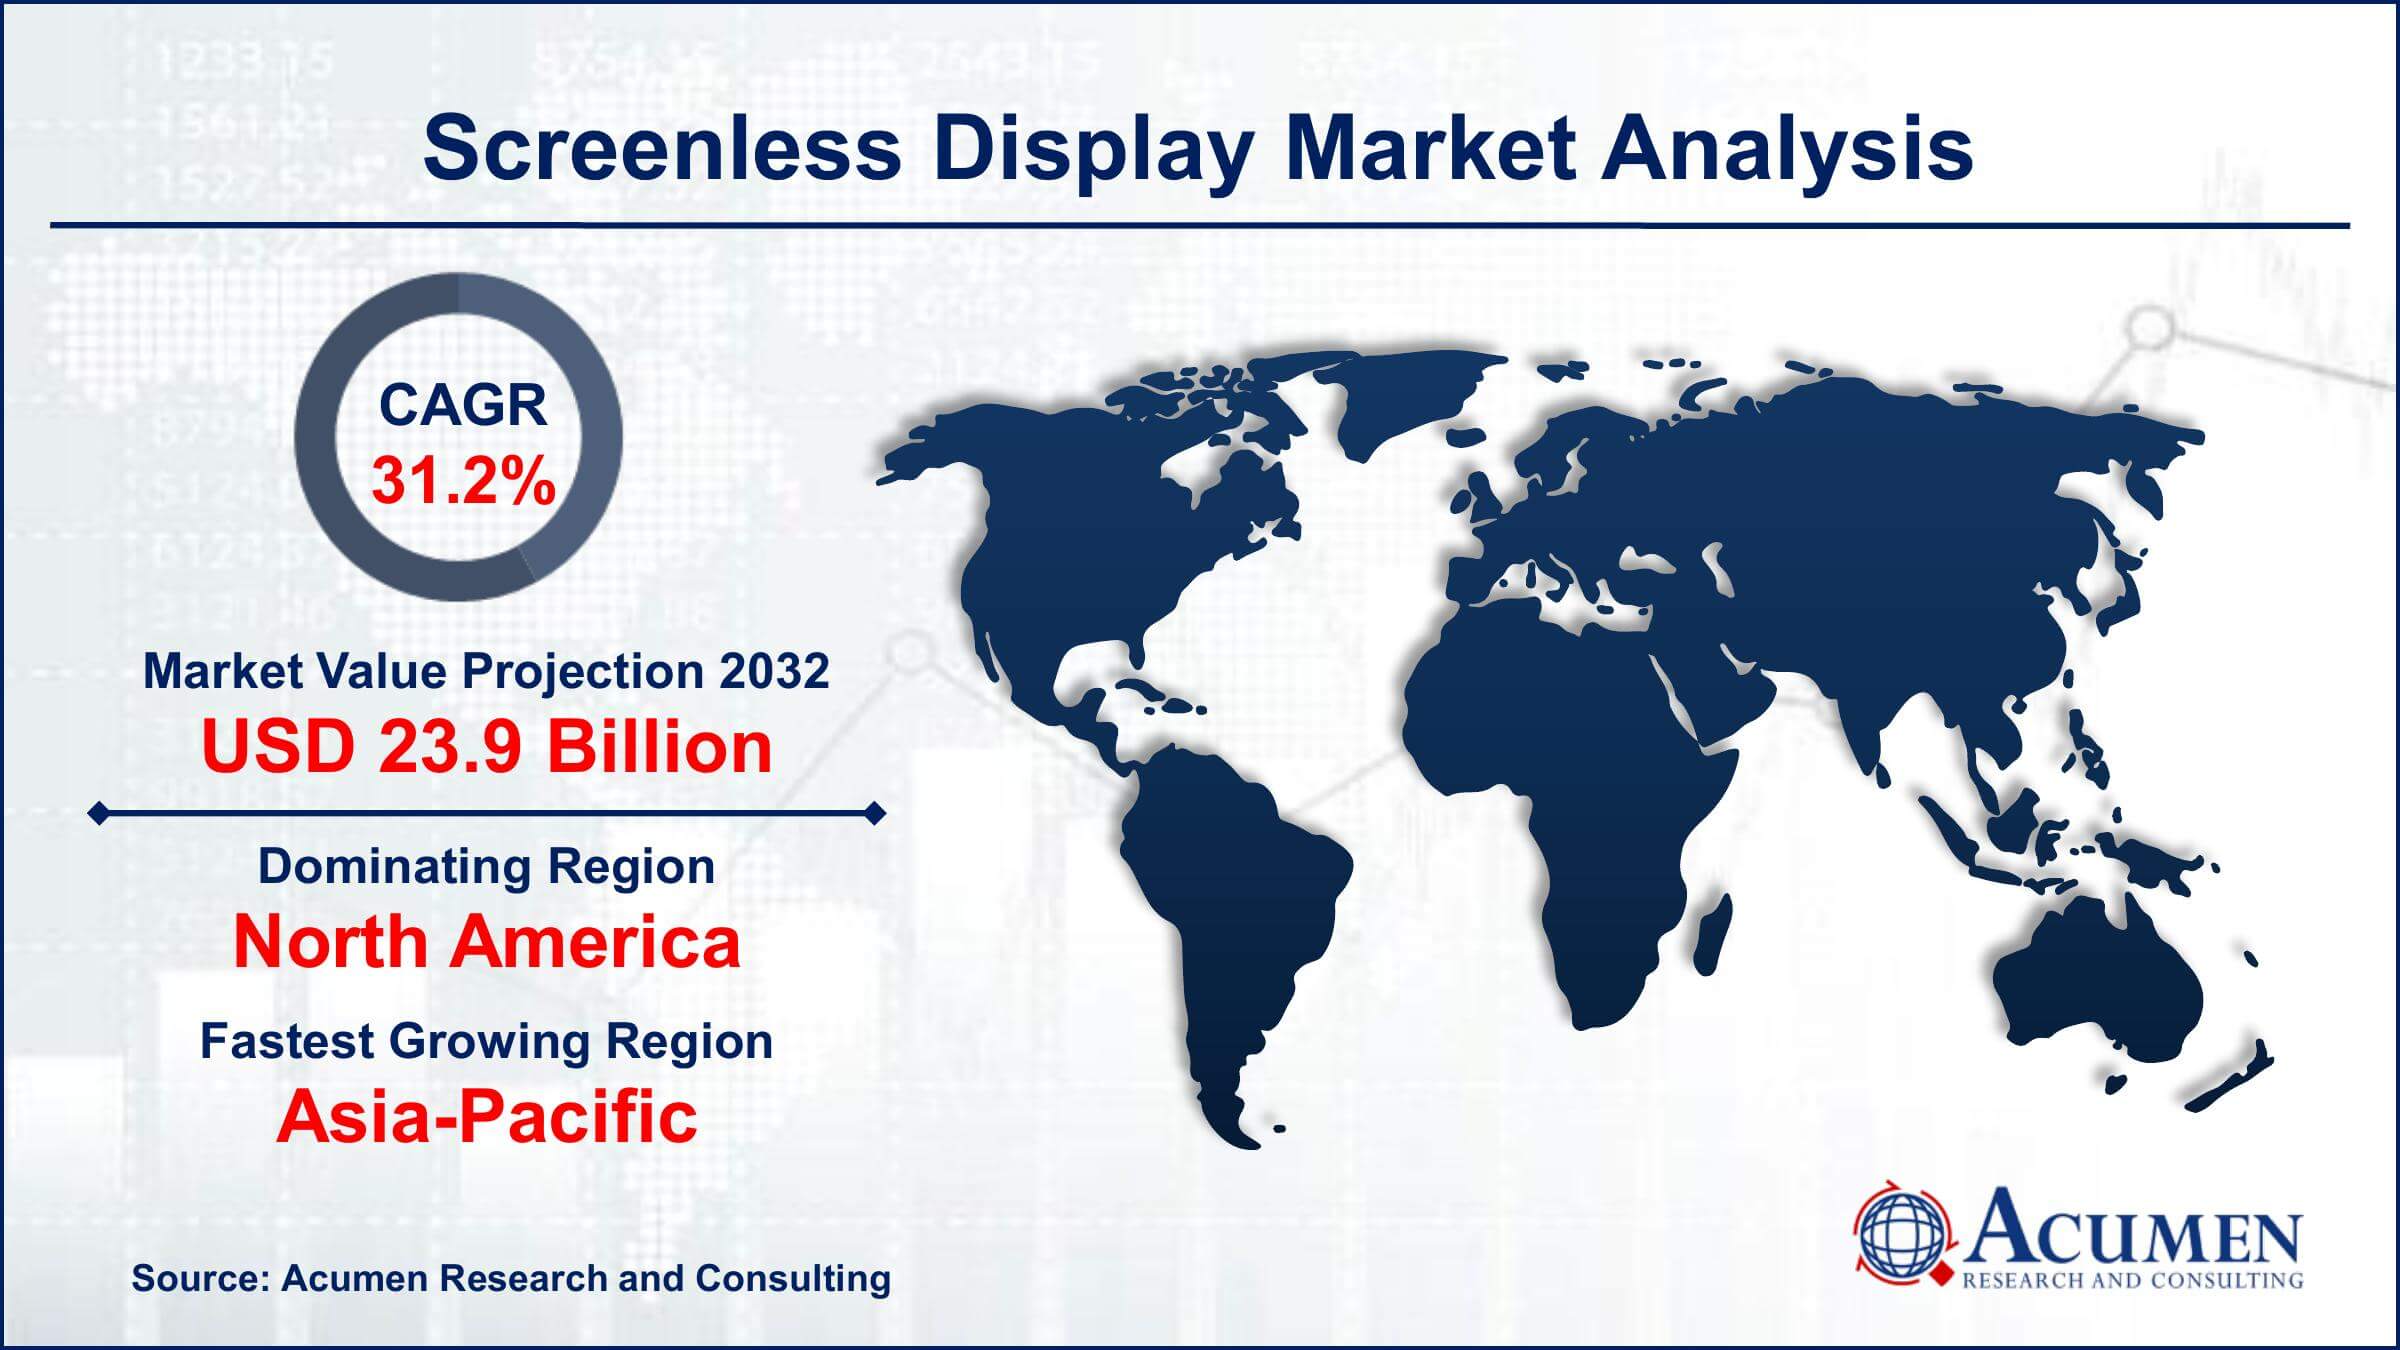 Global Screenless Display Market Trends